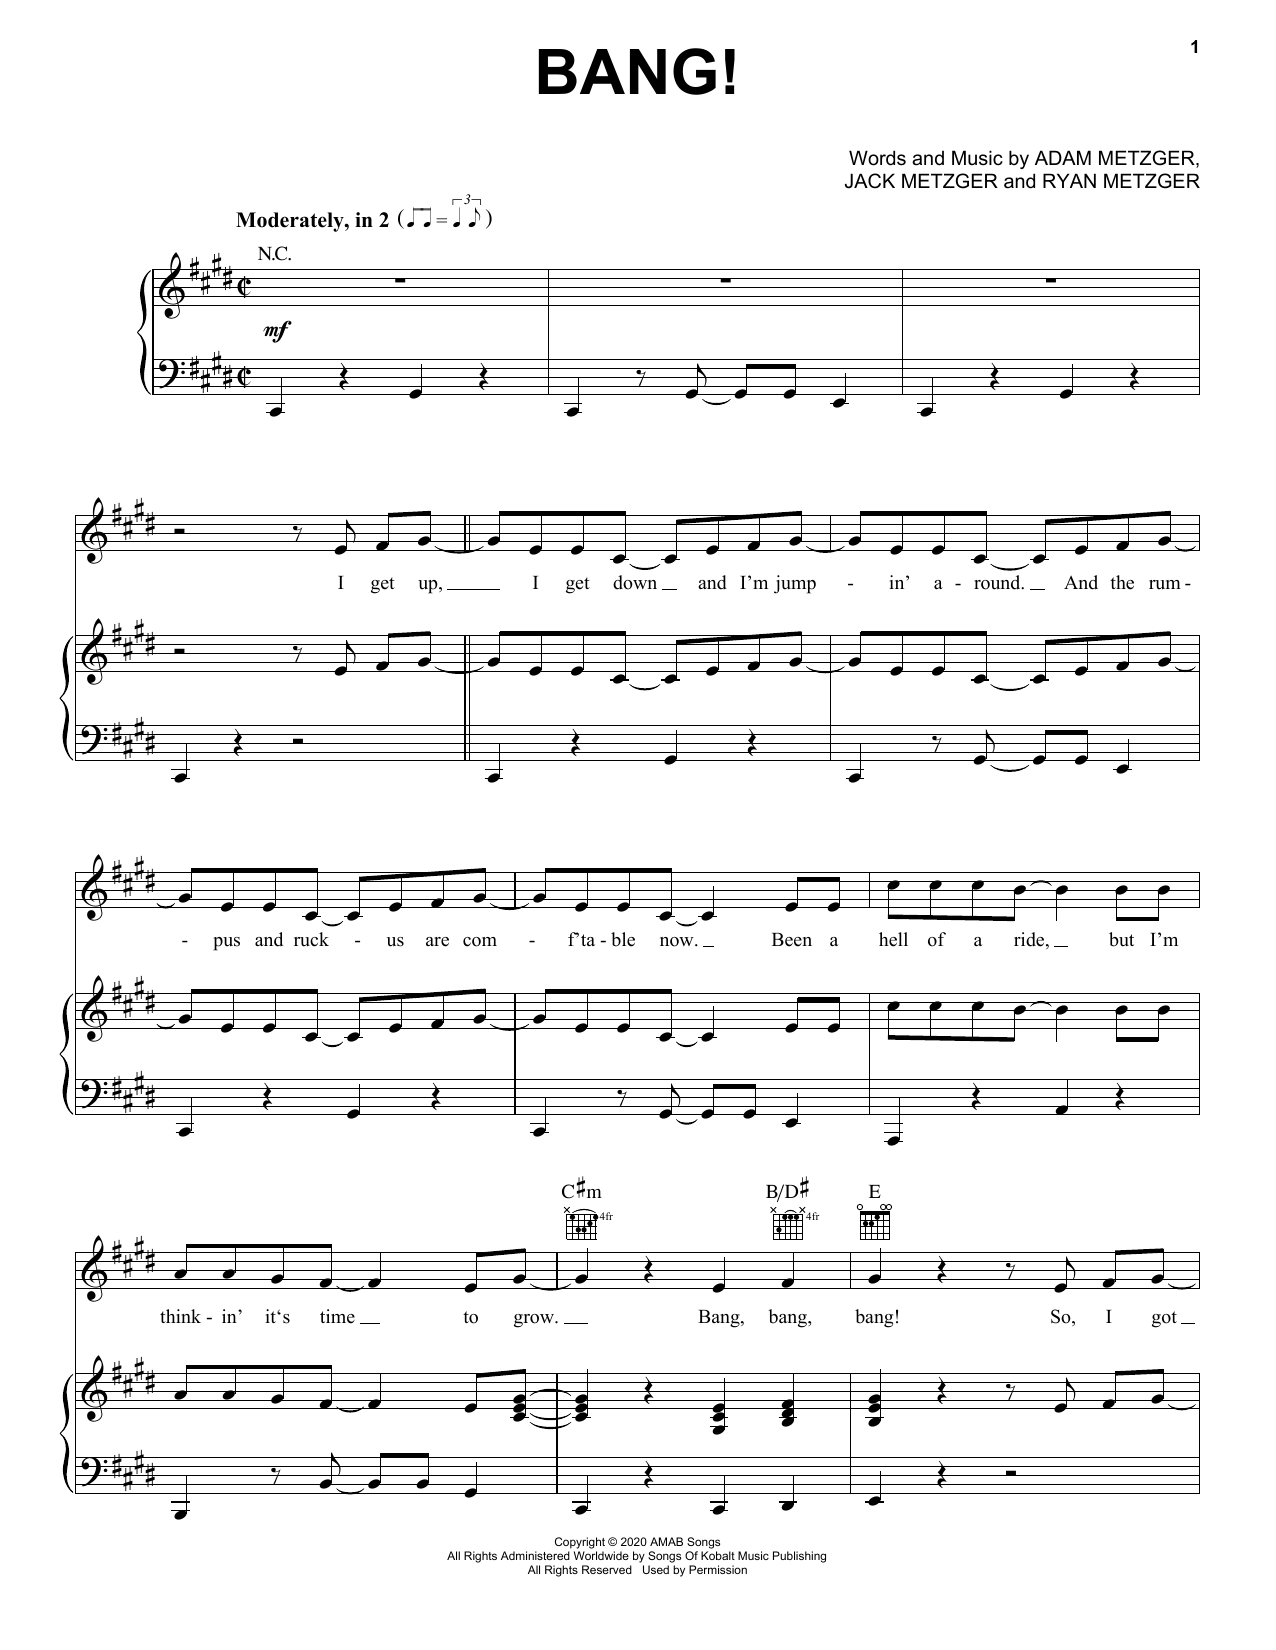 AJR Bang! Sheet Music Notes & Chords for Piano, Vocal & Guitar (Right-Hand Melody) - Download or Print PDF